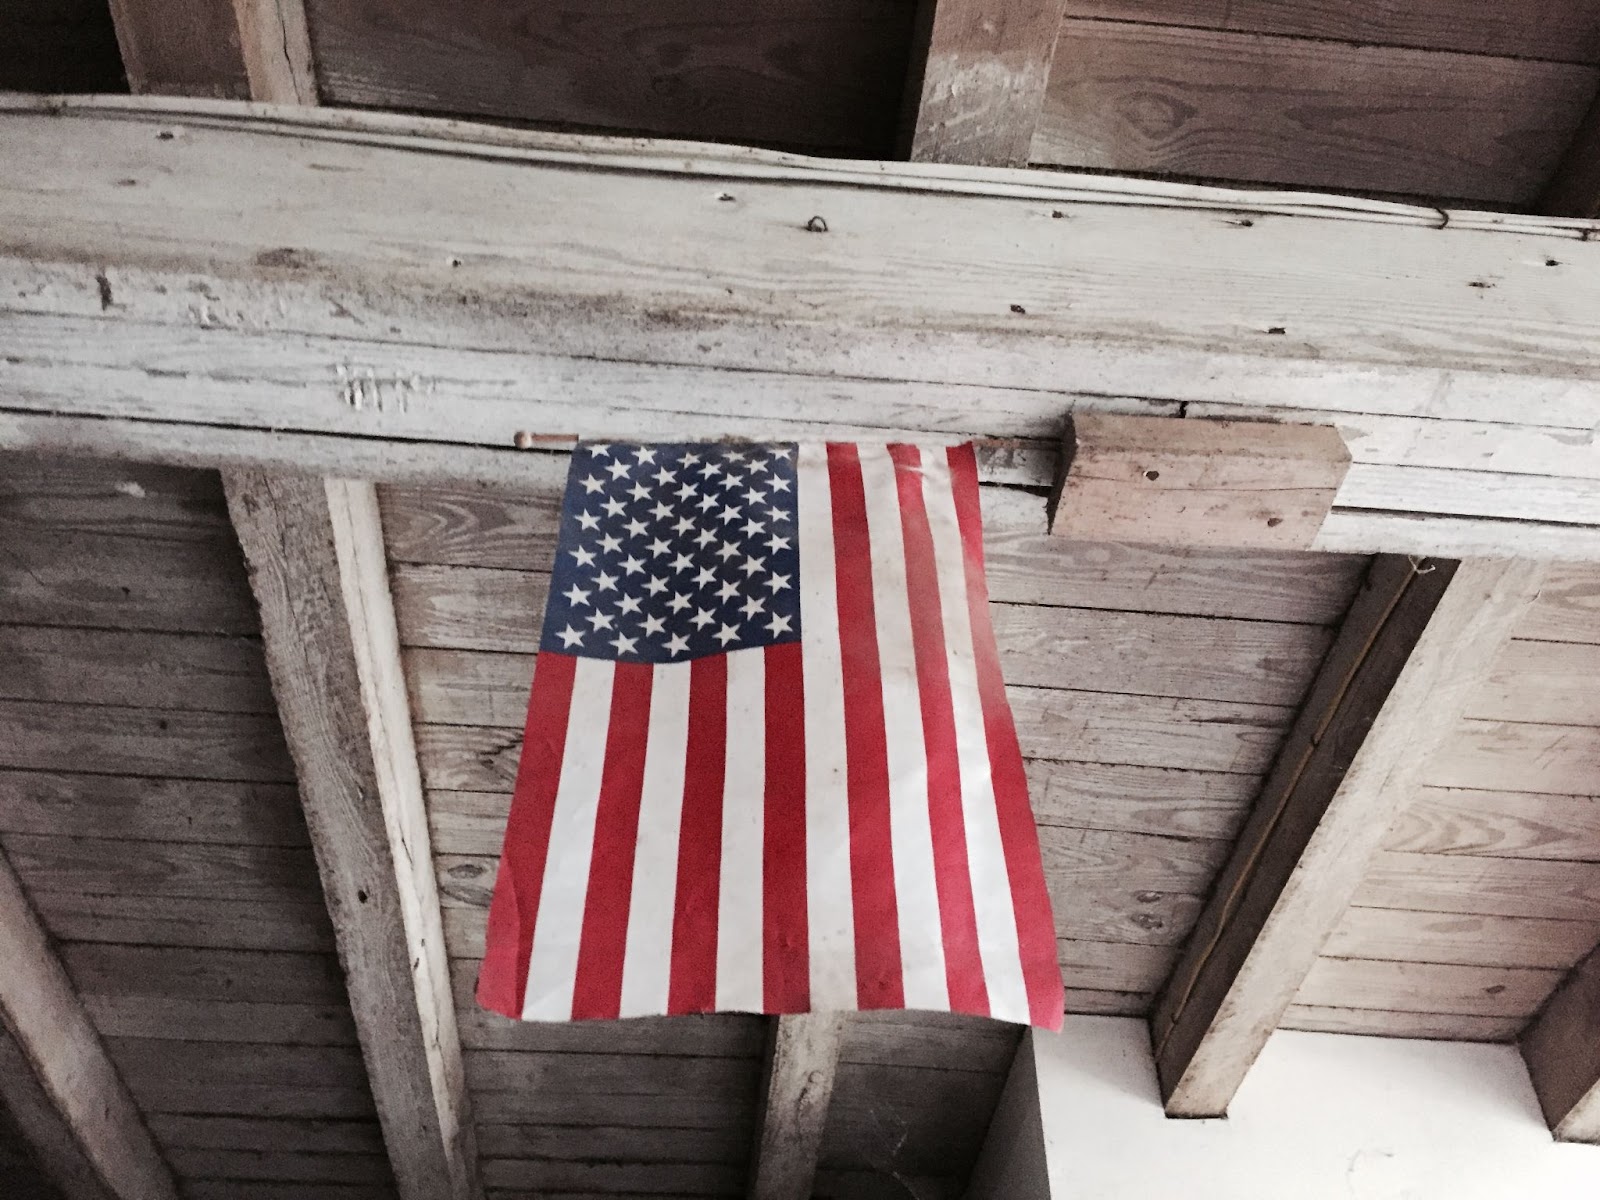 American flag displayed in barn